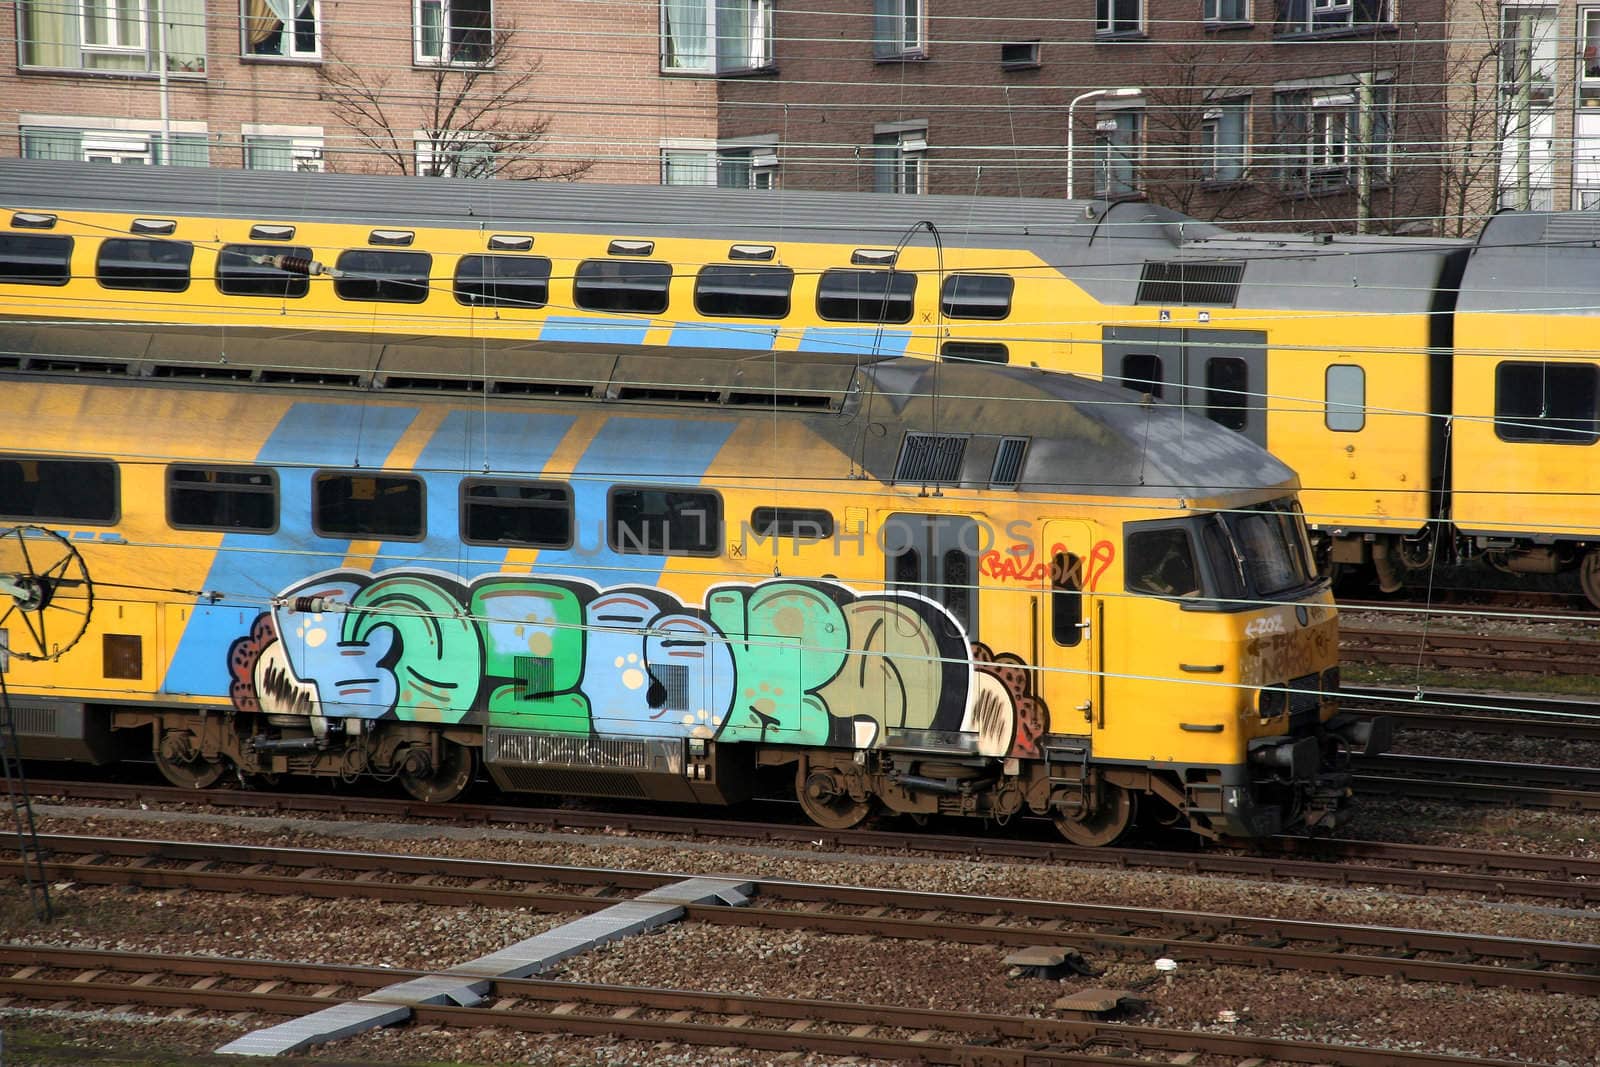 Grafitti on a train, with railroad tracks